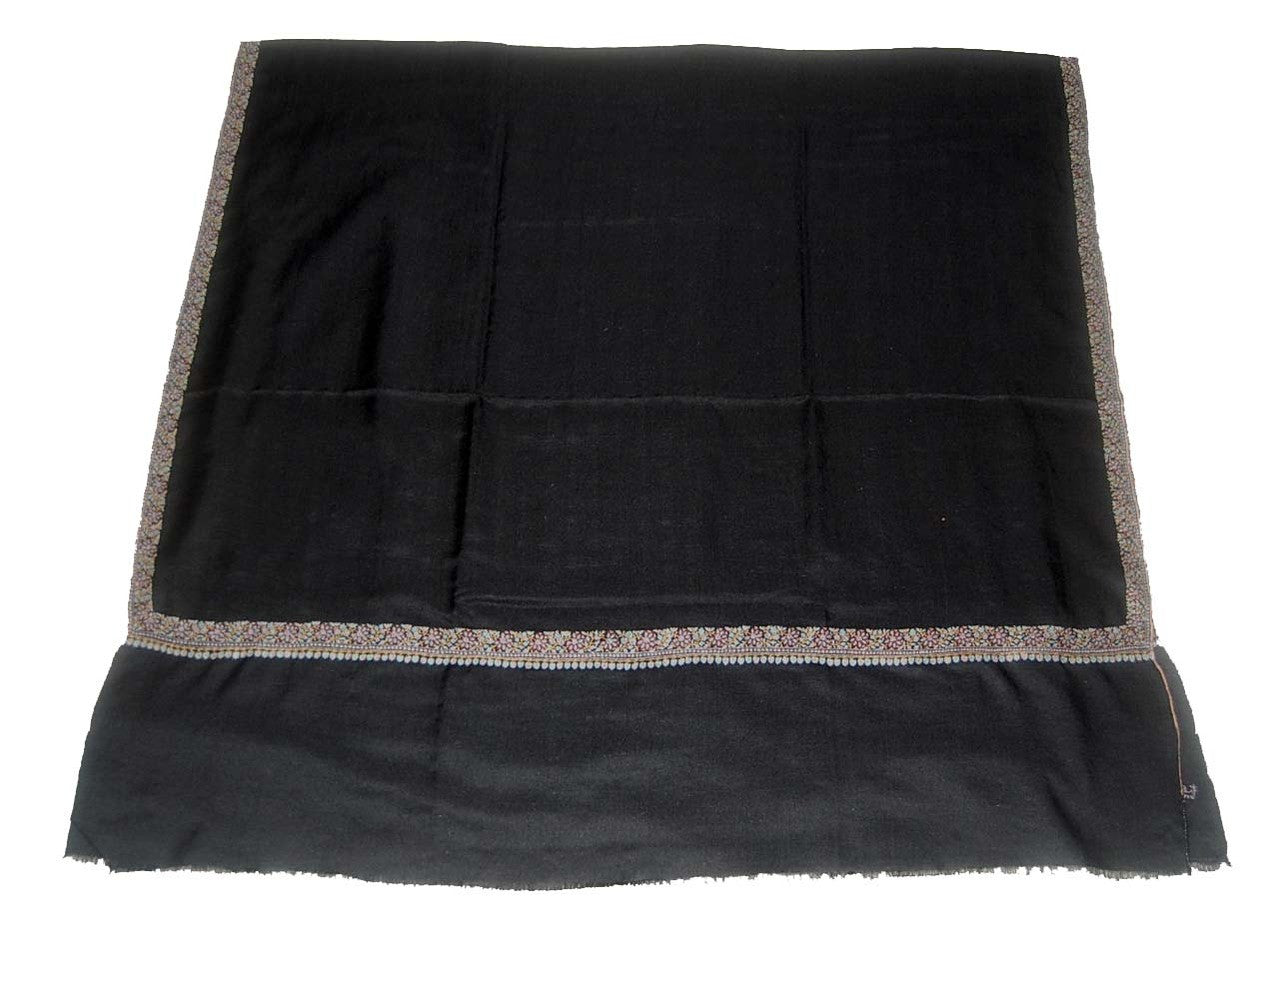 Kashmir Pashmina "Cashmere" Embroidered Shawl Black, Multicolor #PDR-003